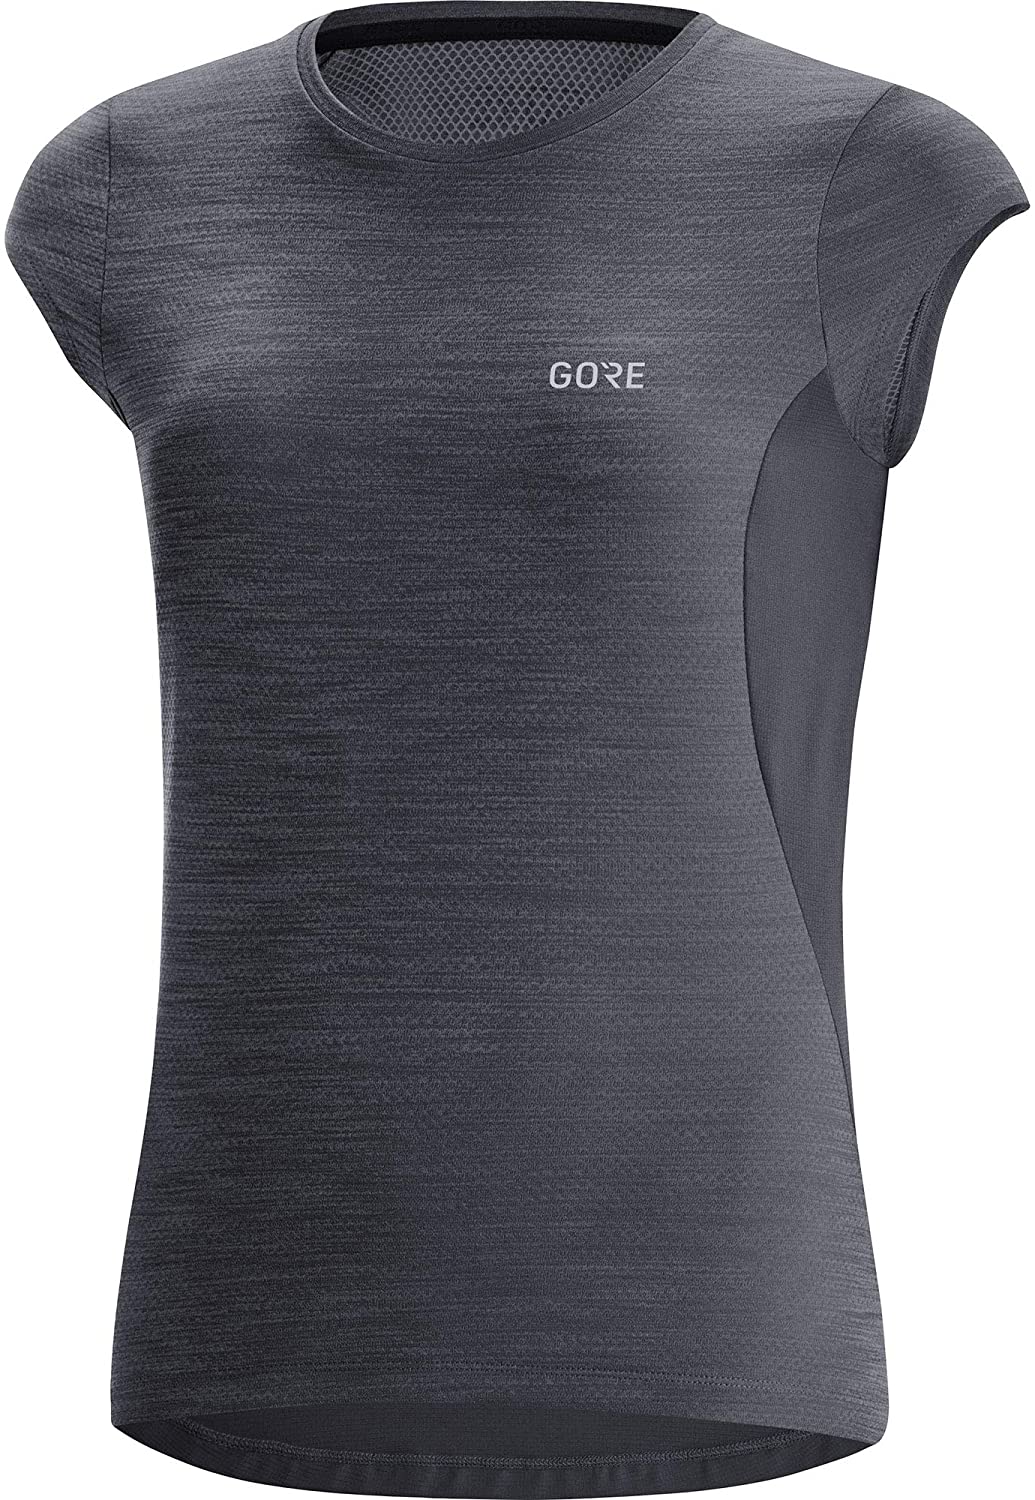 Gore Wear R3 Shirt - T-shirt - Women's